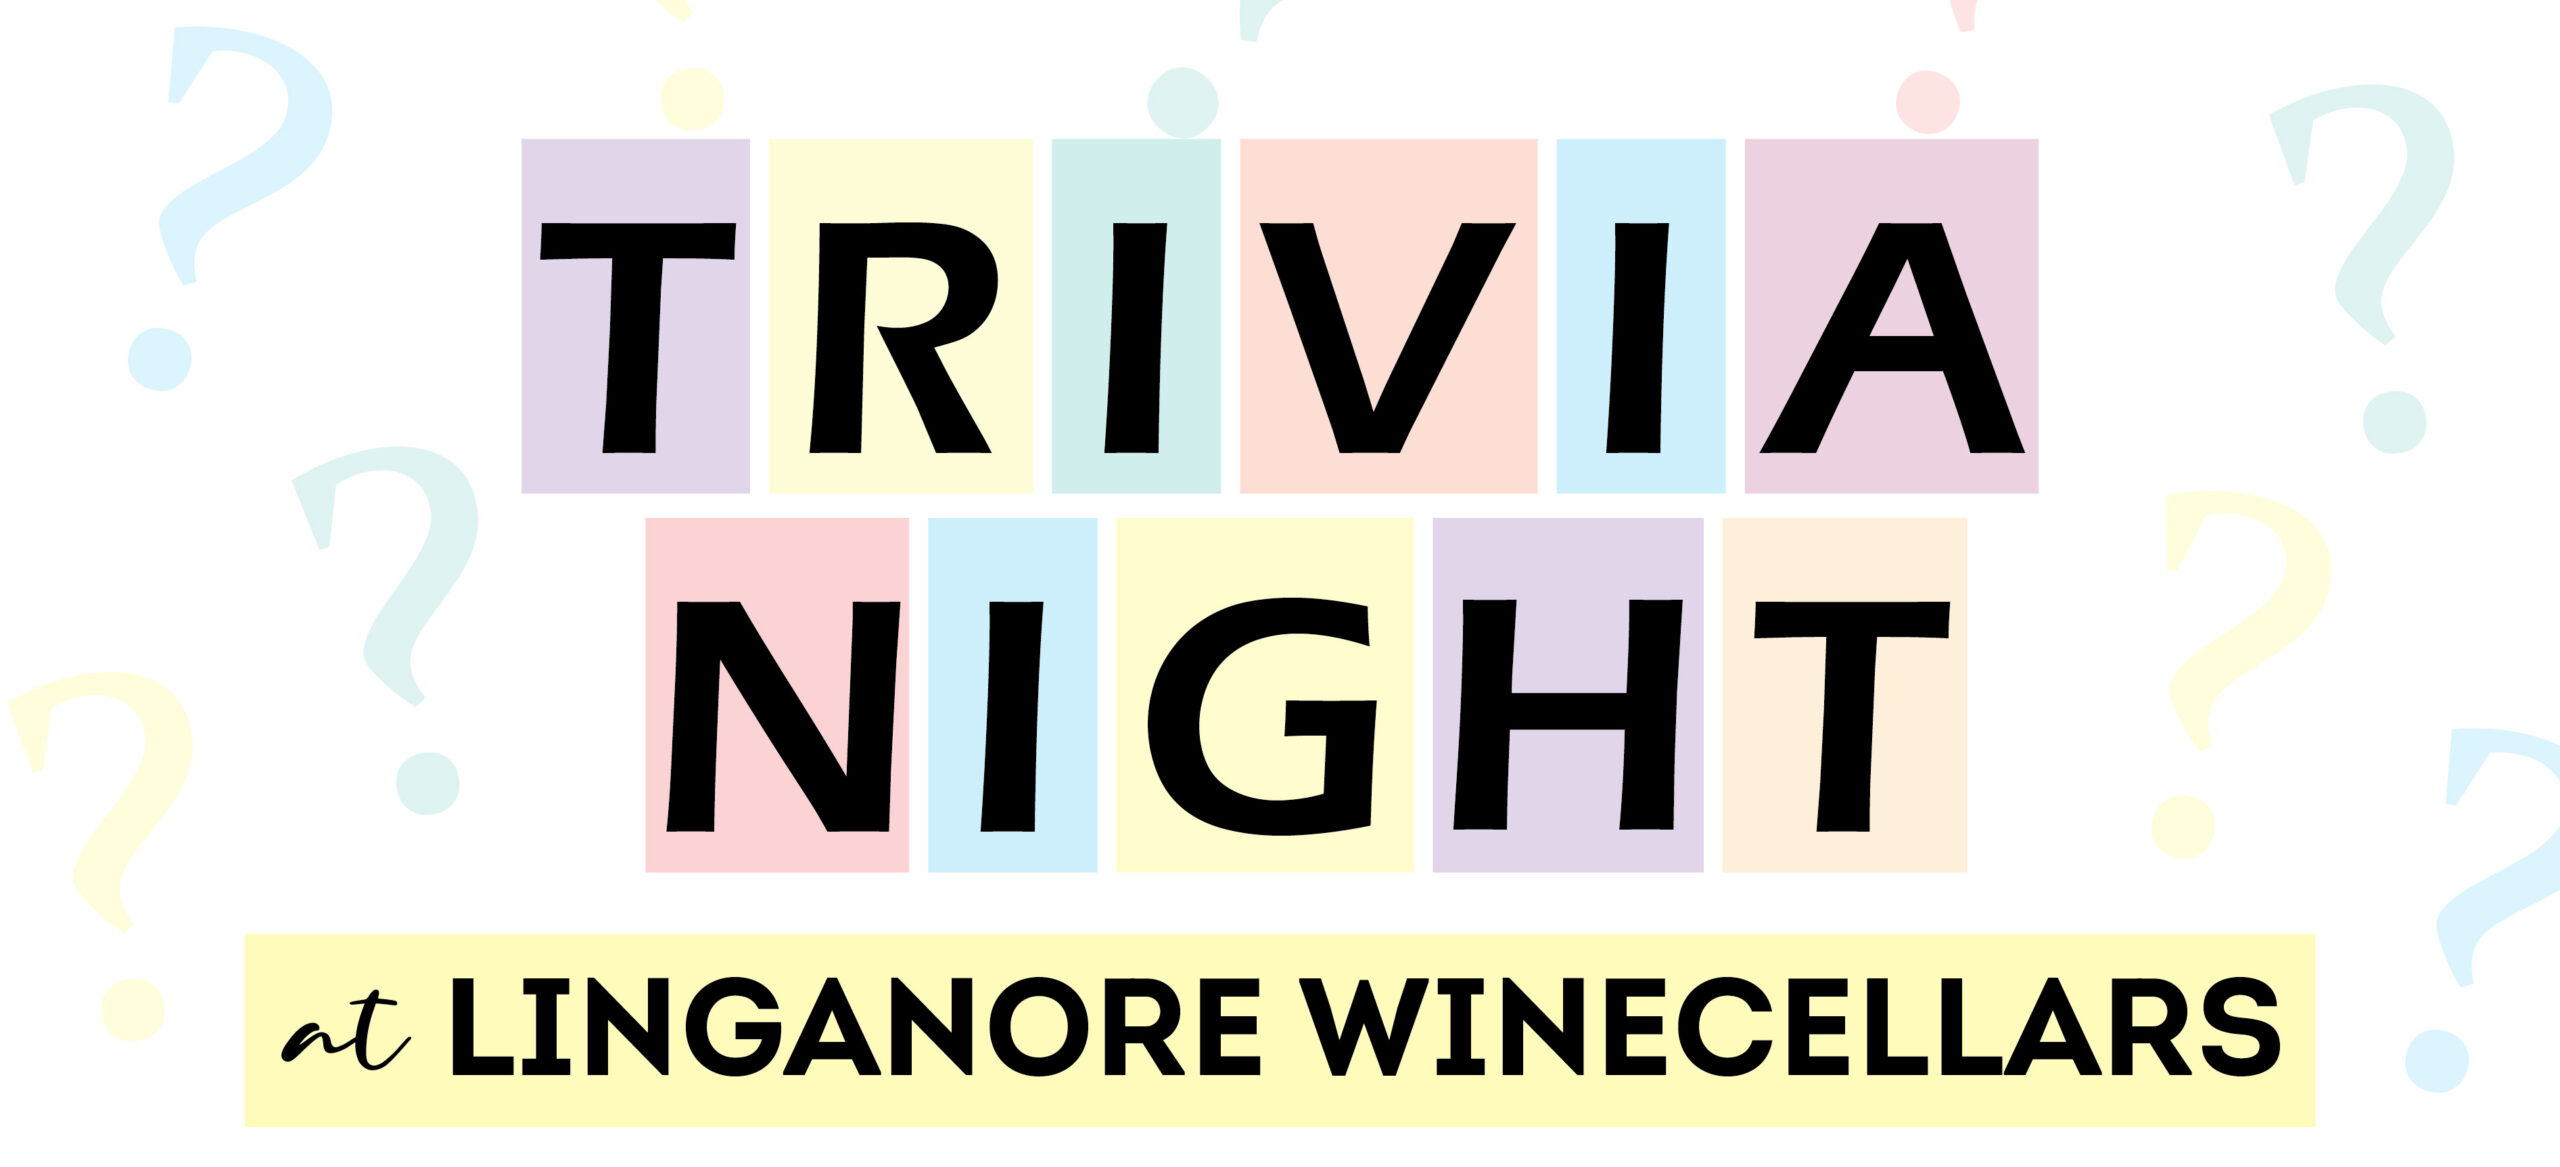 trivia night at linganore winecellars banner